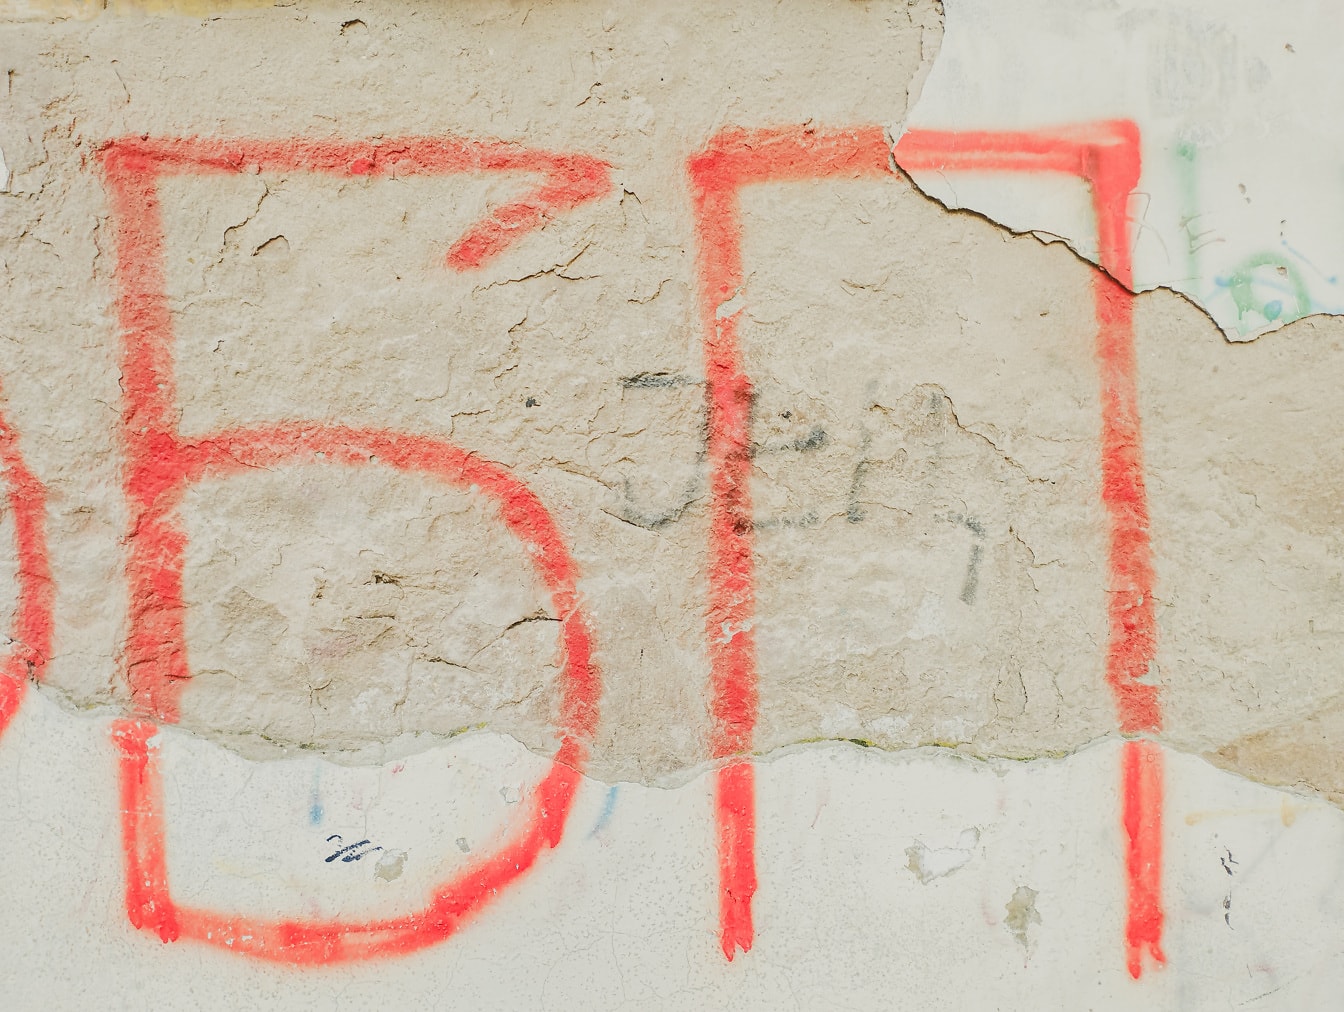 Cyrillische tekstgraffiti op oude verwoeste muur